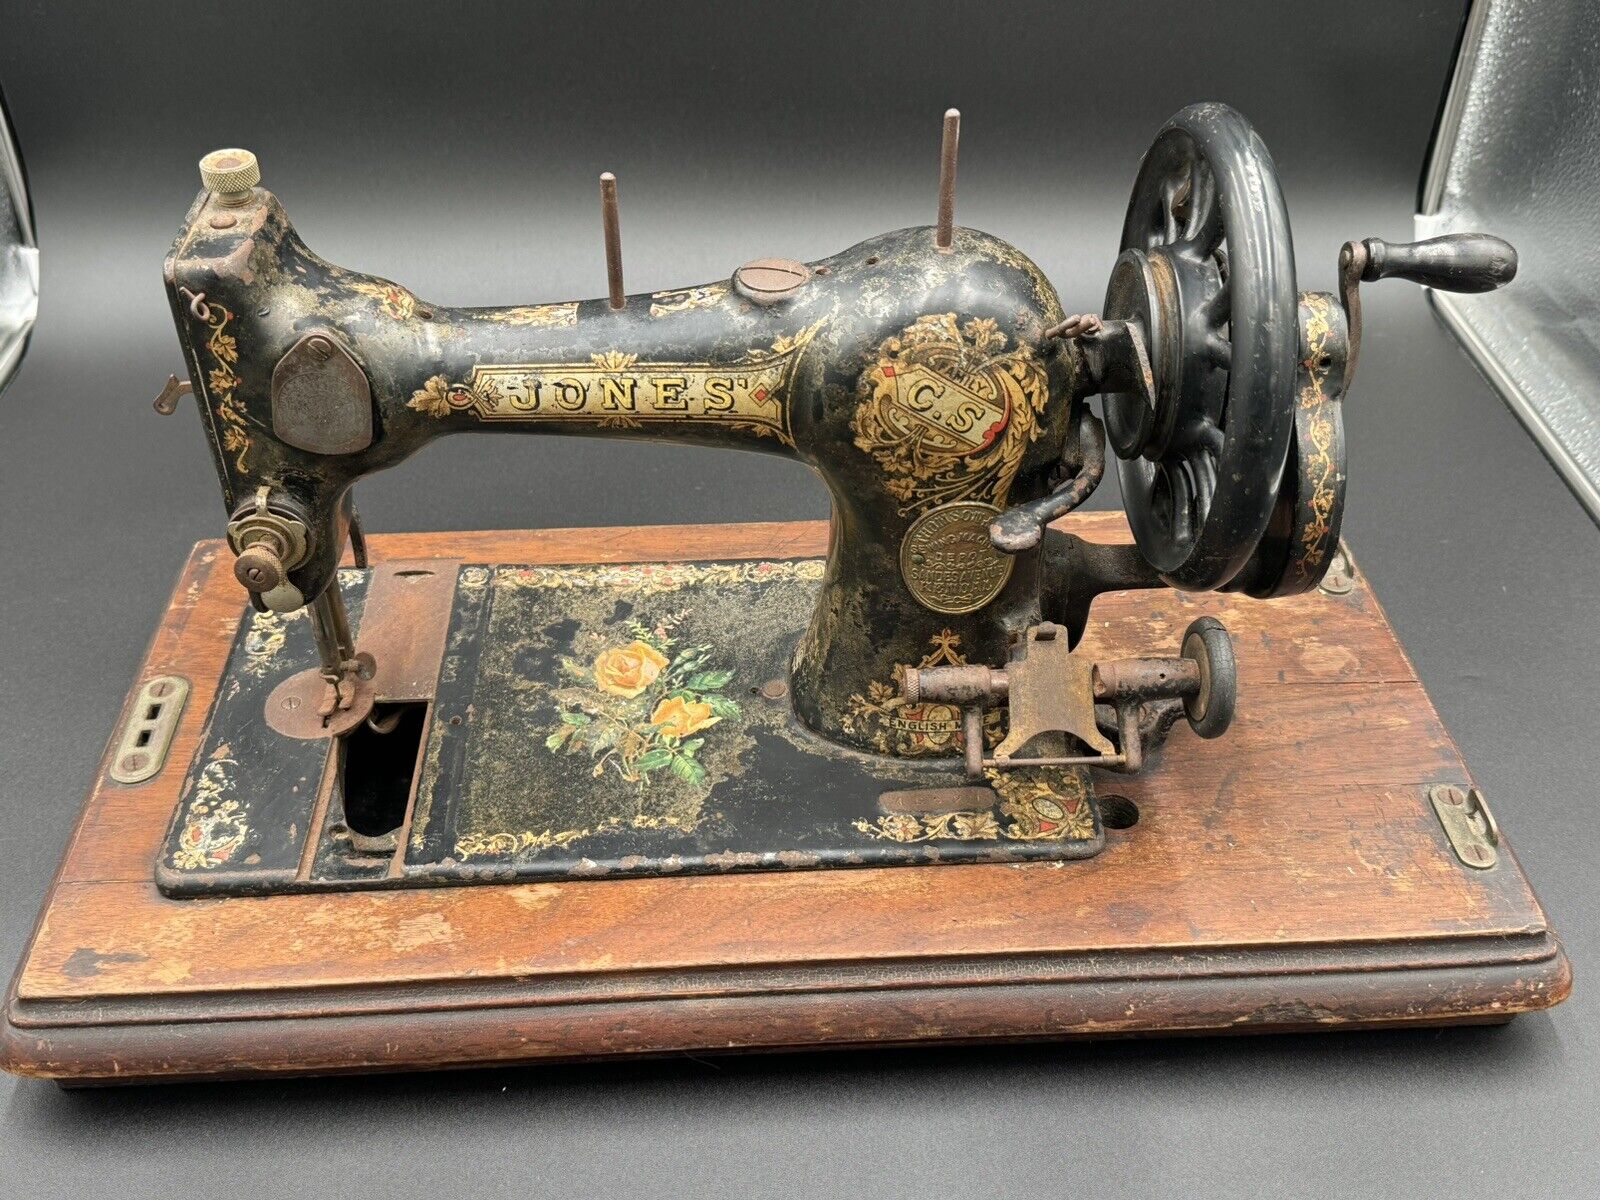 Jones Family CS Type 4 Handcrank Sewing Machine